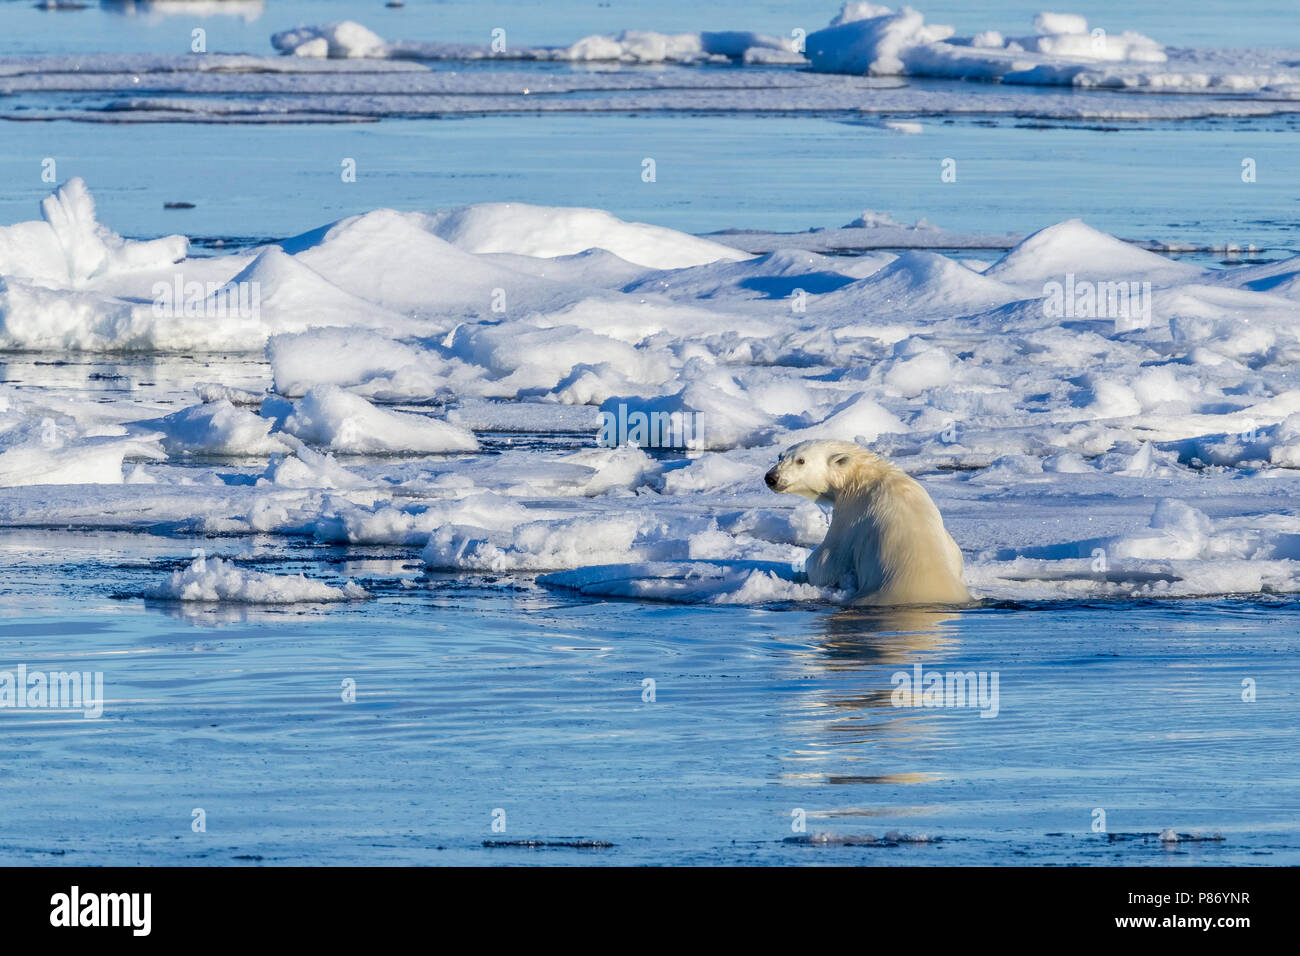 Polar Bear (Ursus marinus). Haussgarden, Greenland Sea. No Country for old Bear. German Polar research expedition ship named Polarstern. Big breath fr Stock Photo